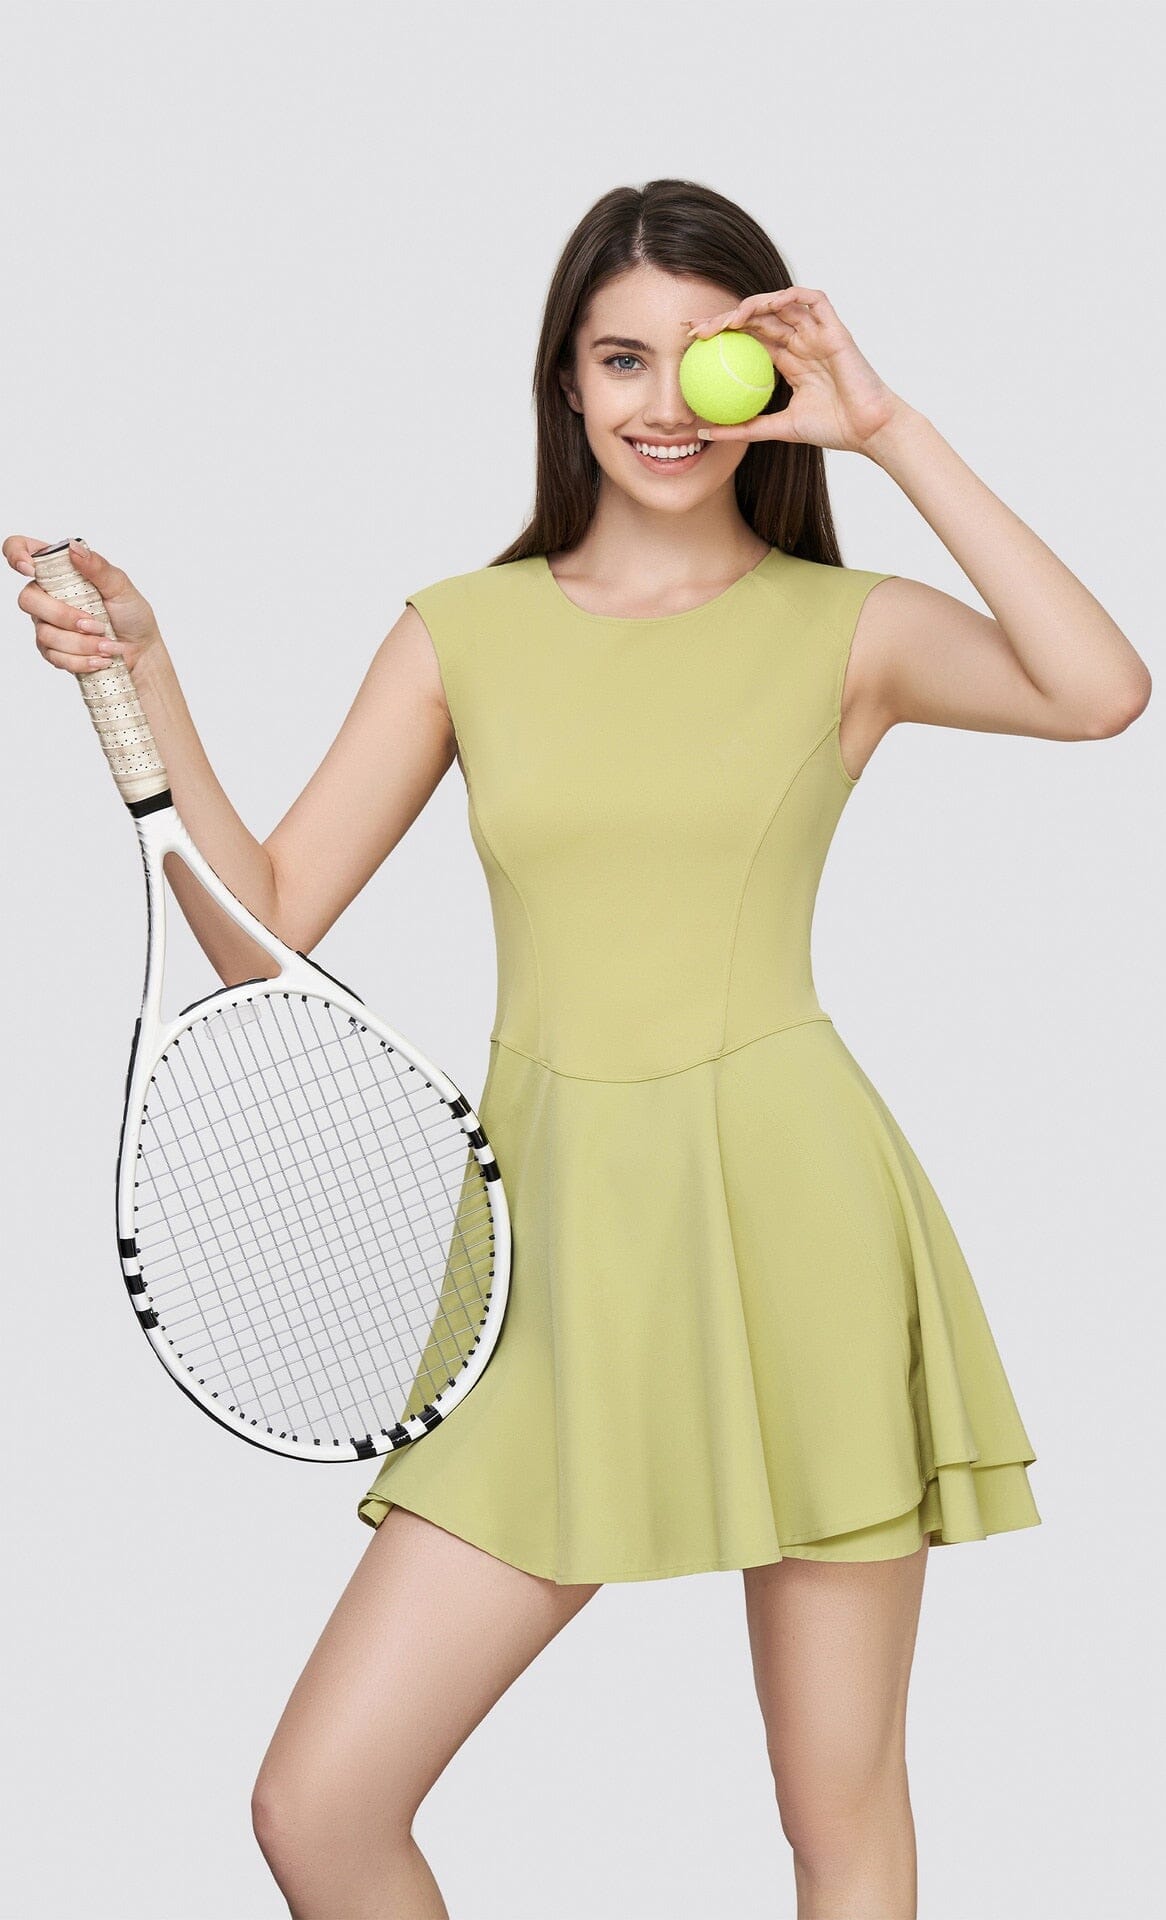 Sun Curve Tennis Dress Starlethics 